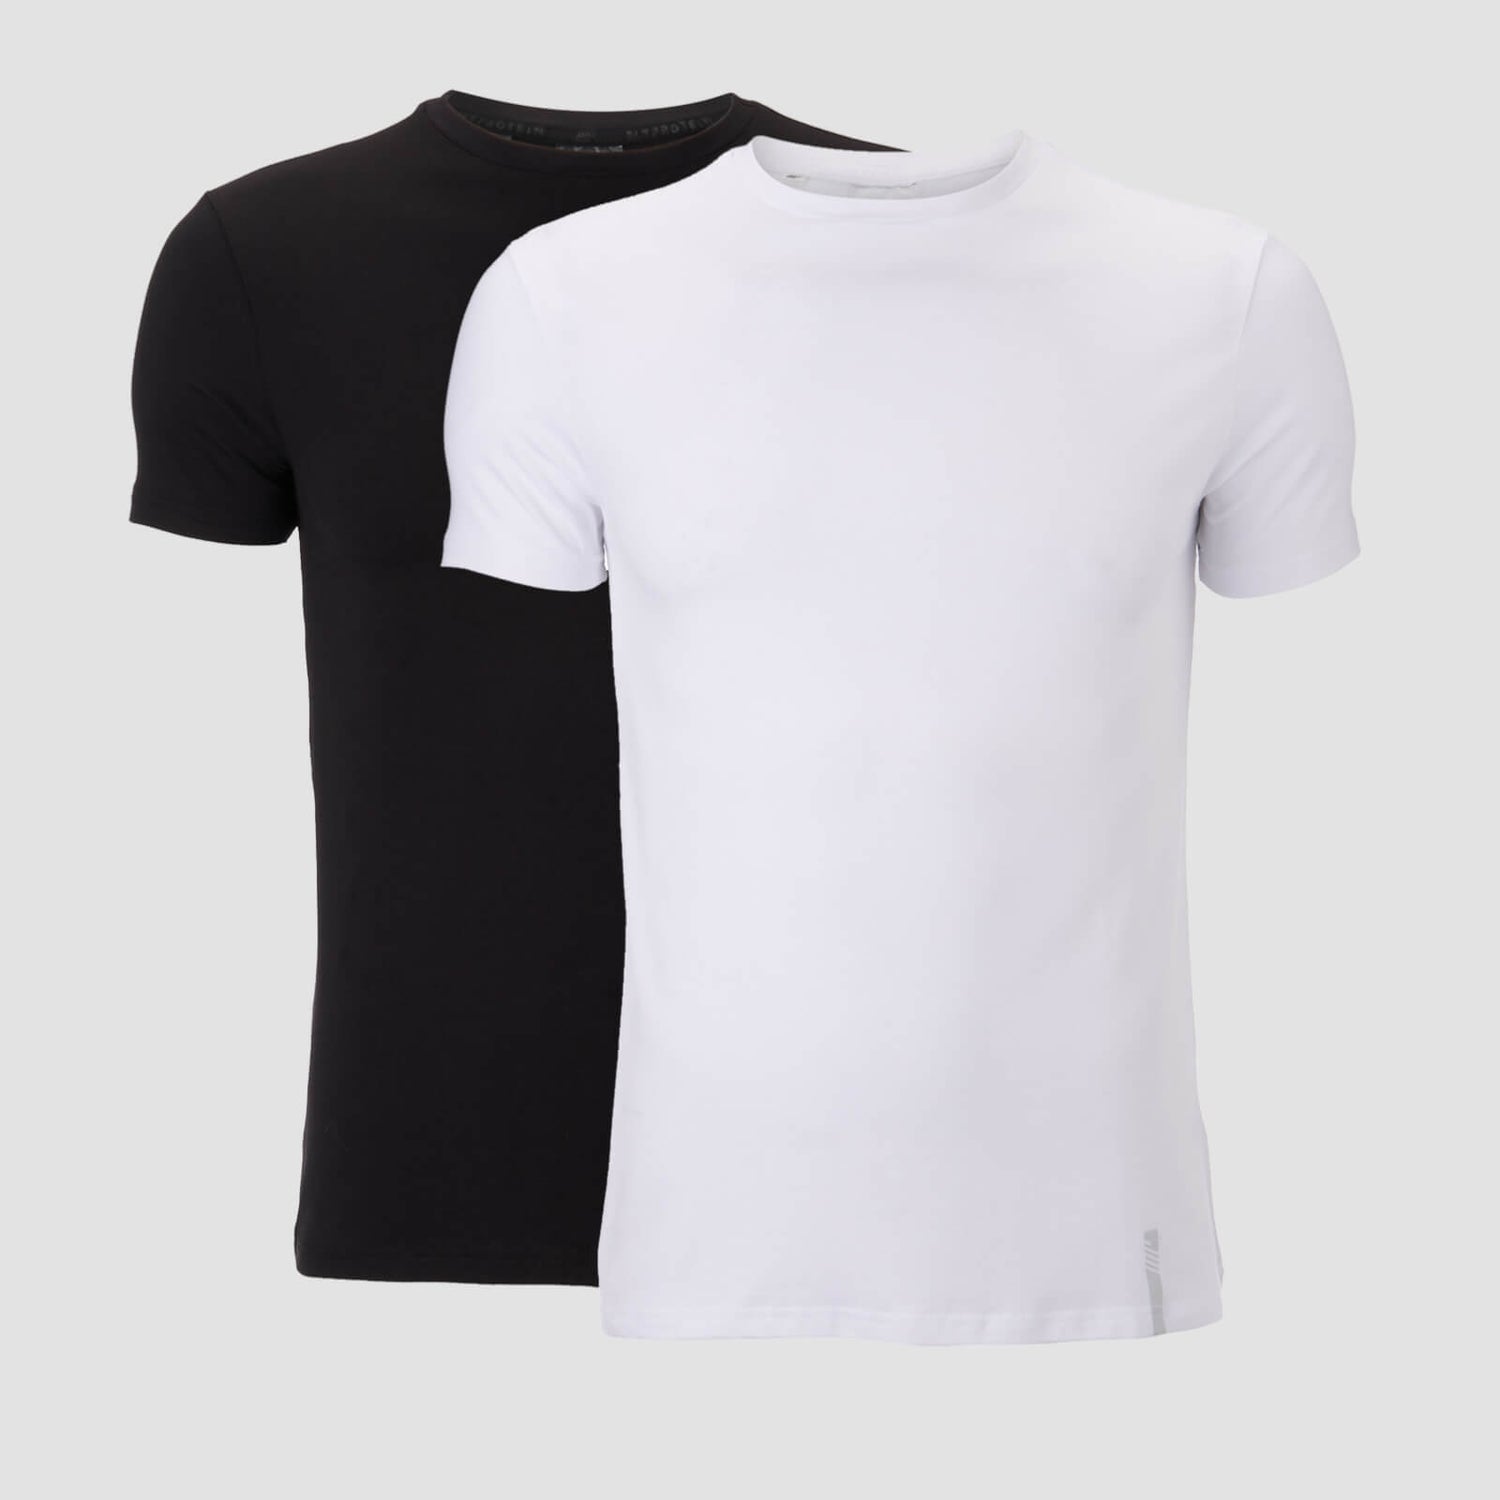 MP Herren Luxe Classic Crew T-Shirt — Schwarz/Weiß (2er Pack) - XXL